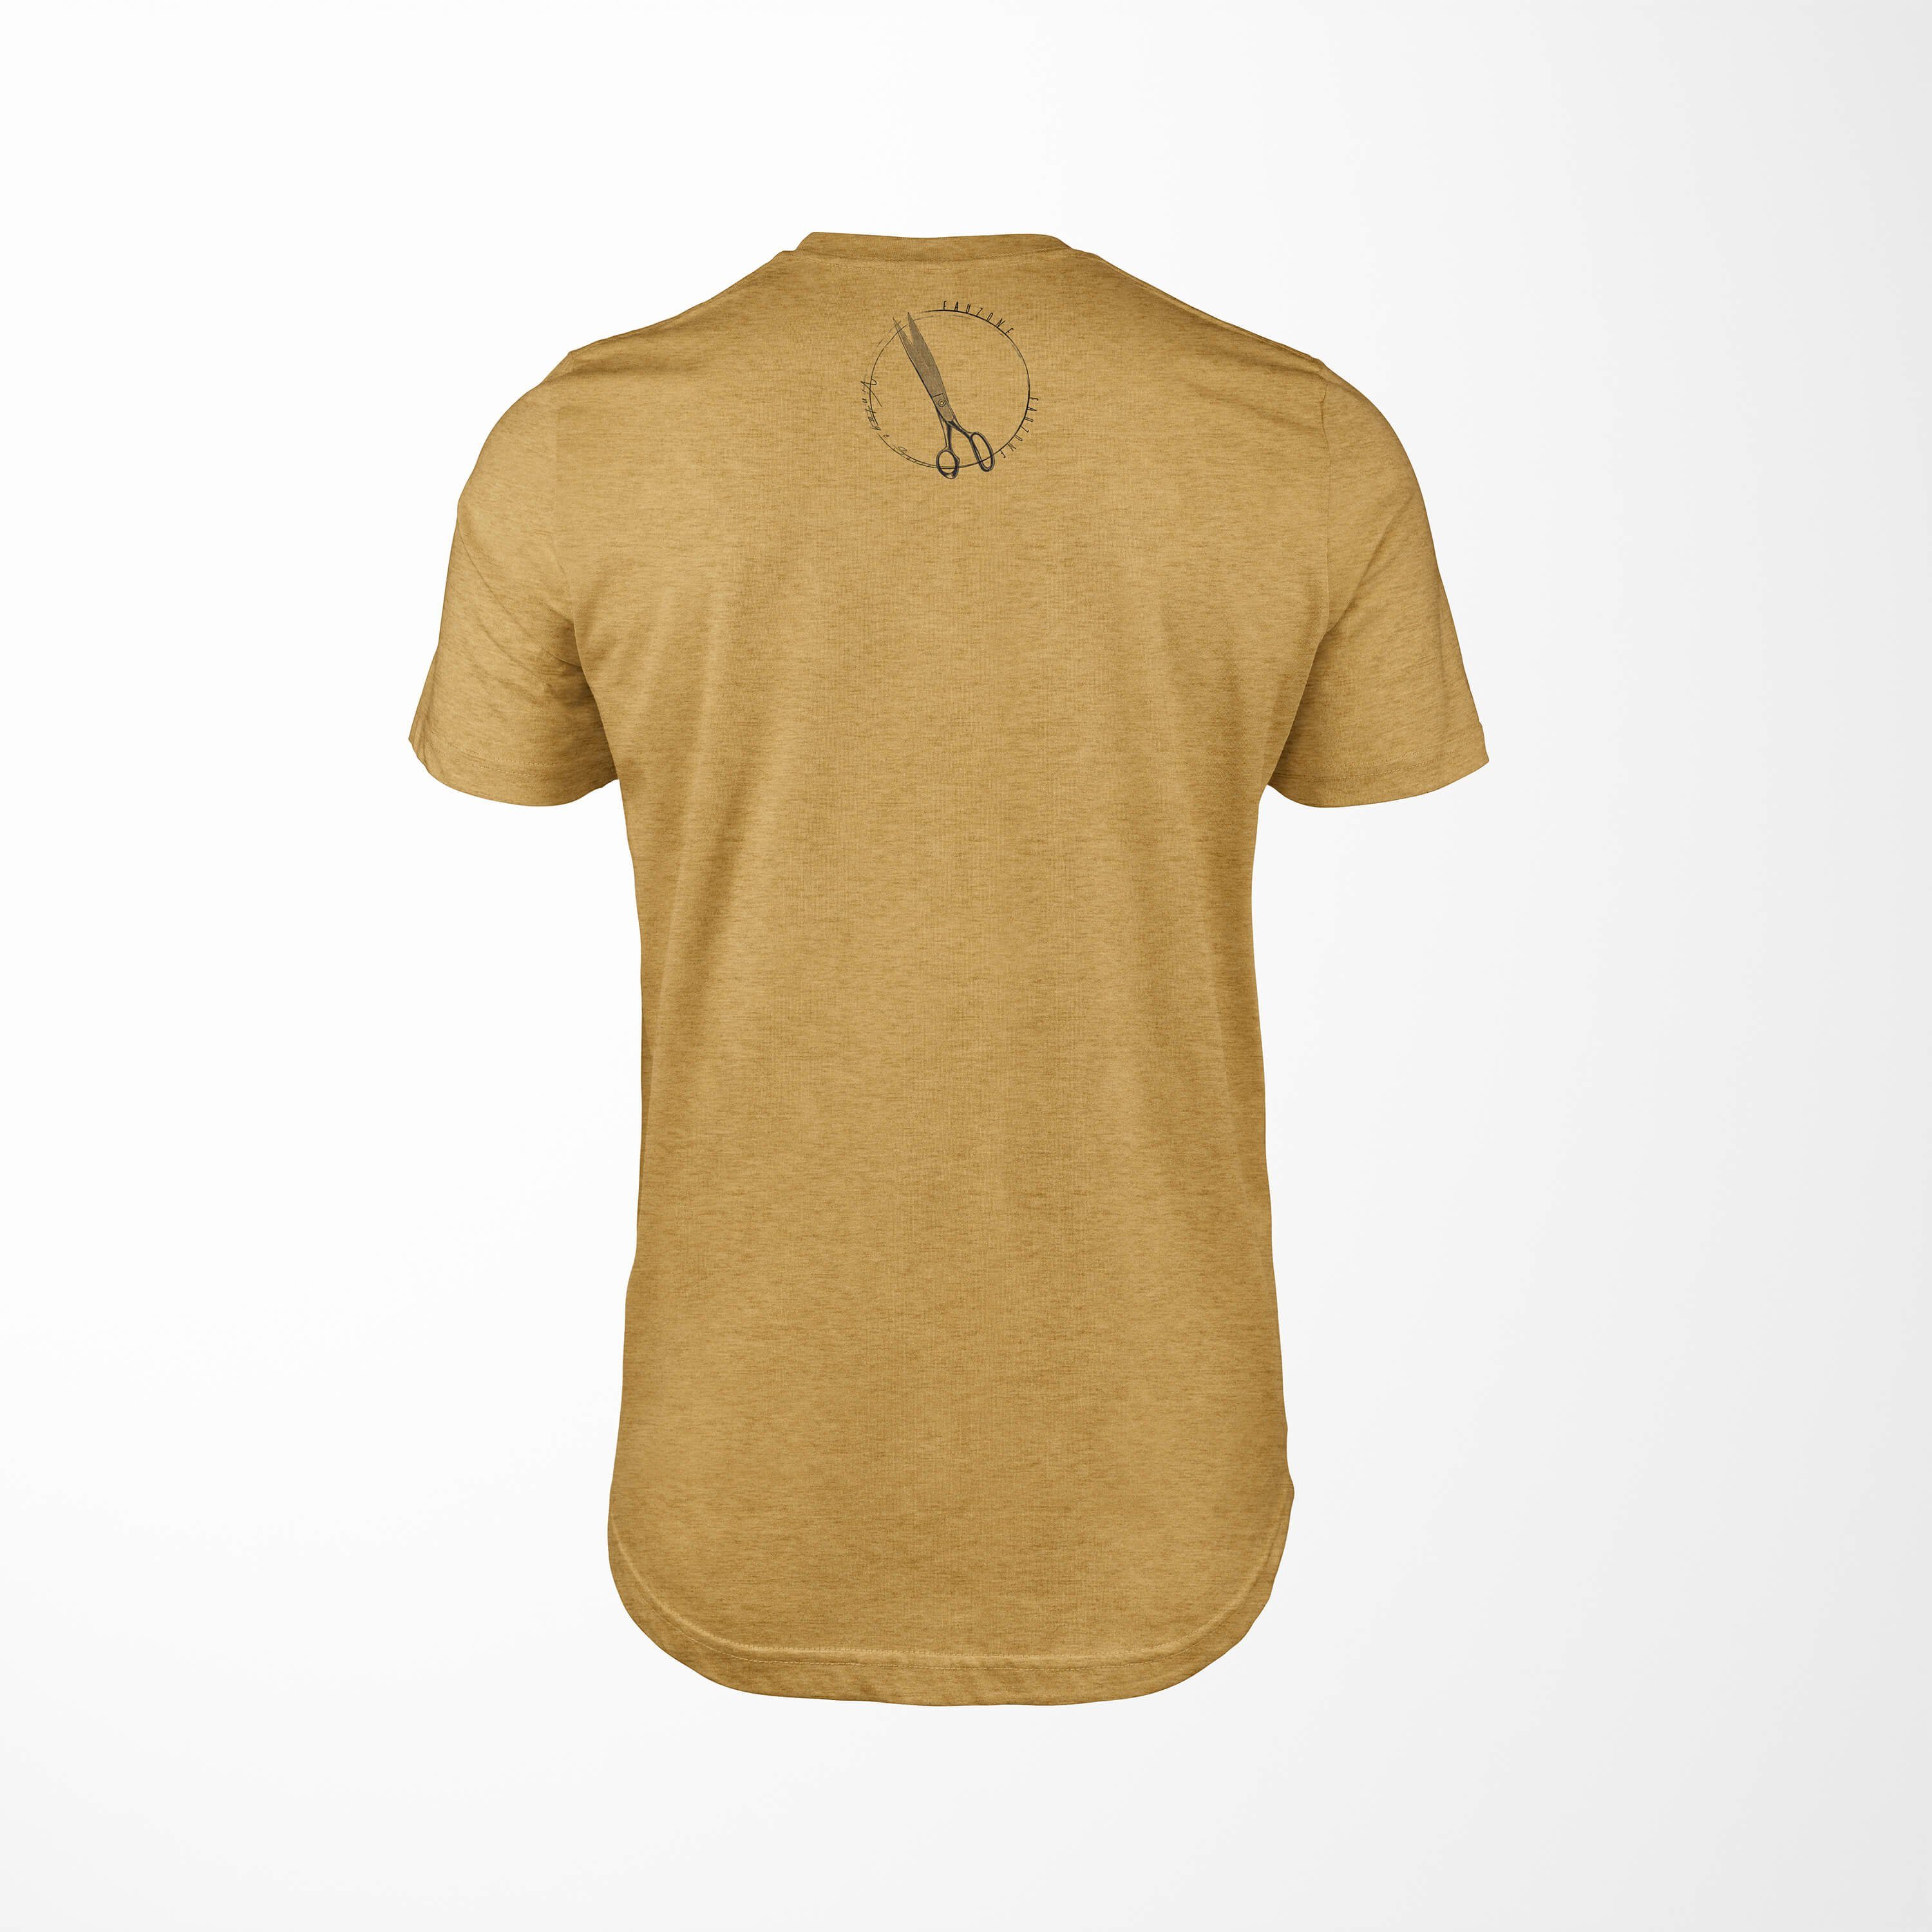 Vintage Antique T-Shirt Gold Sinus Art Herren T-Shirt Schere